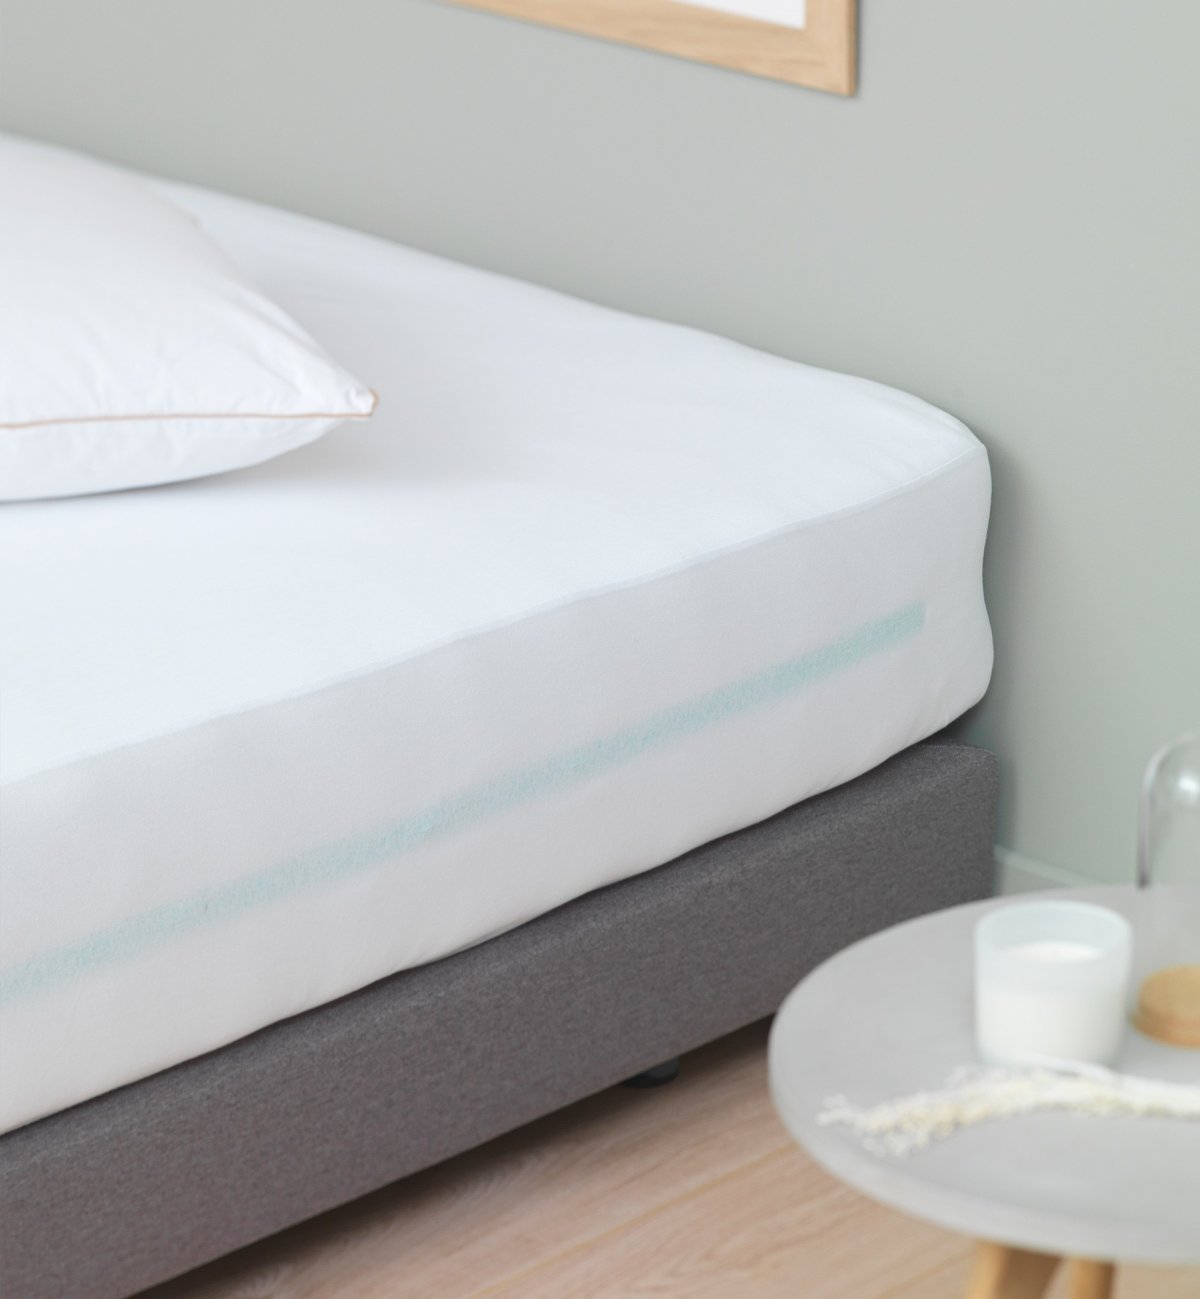 Cotton mattress sheet for baby mattresses made of Organic Cotton Kadolis without PVC